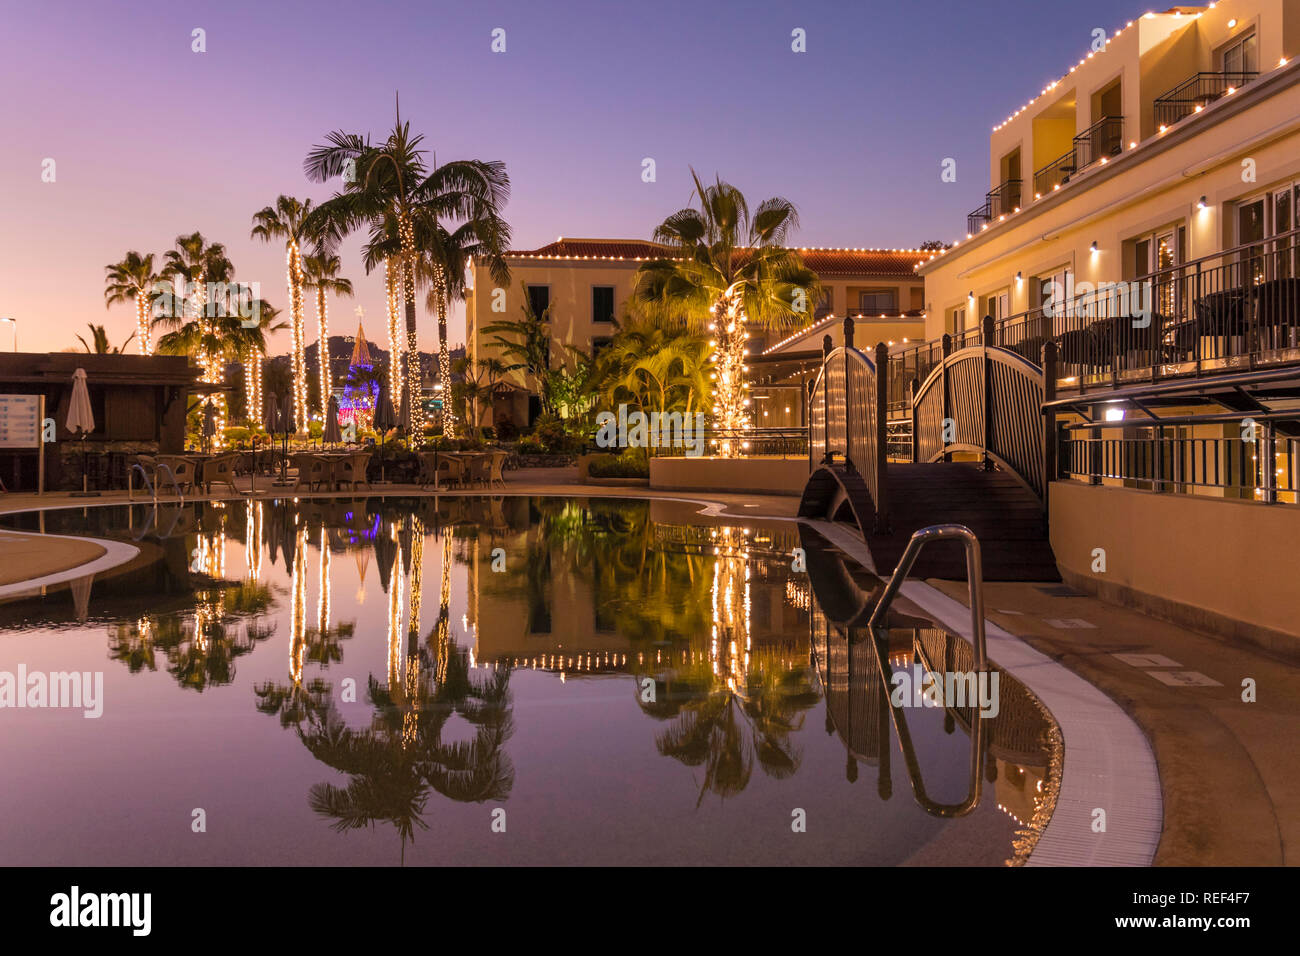 Hotel porto santa maria hi-res stock photography and images - Alamy